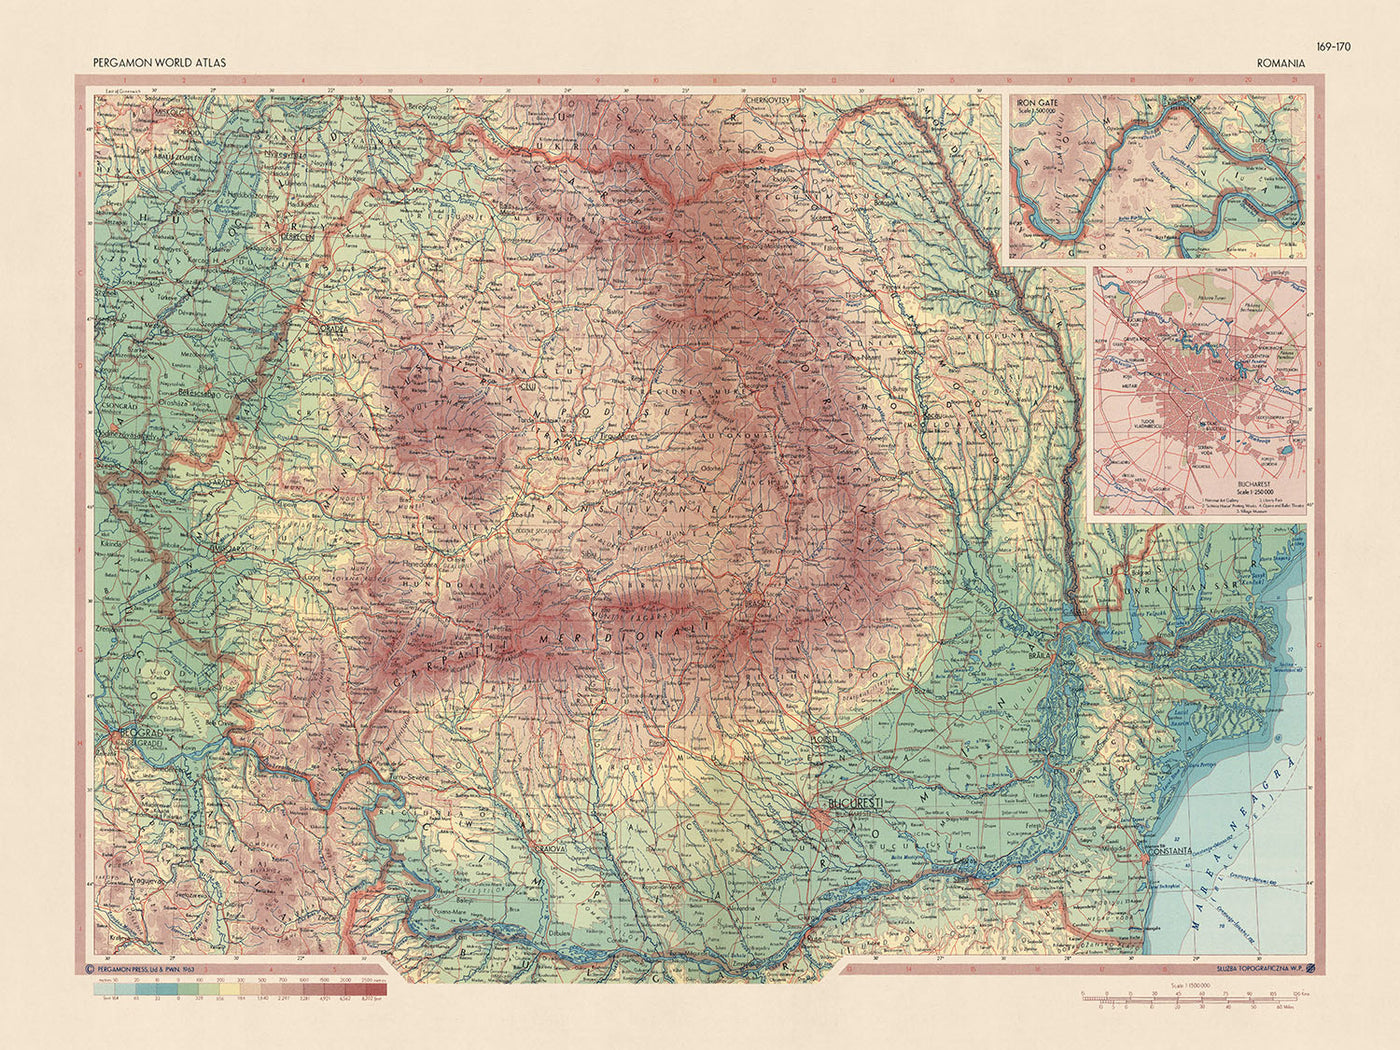 Old Map of Romania, 1967: Bucharest, Cluj-Napoca, Timișoara, Carpathian Mountains, Danube River